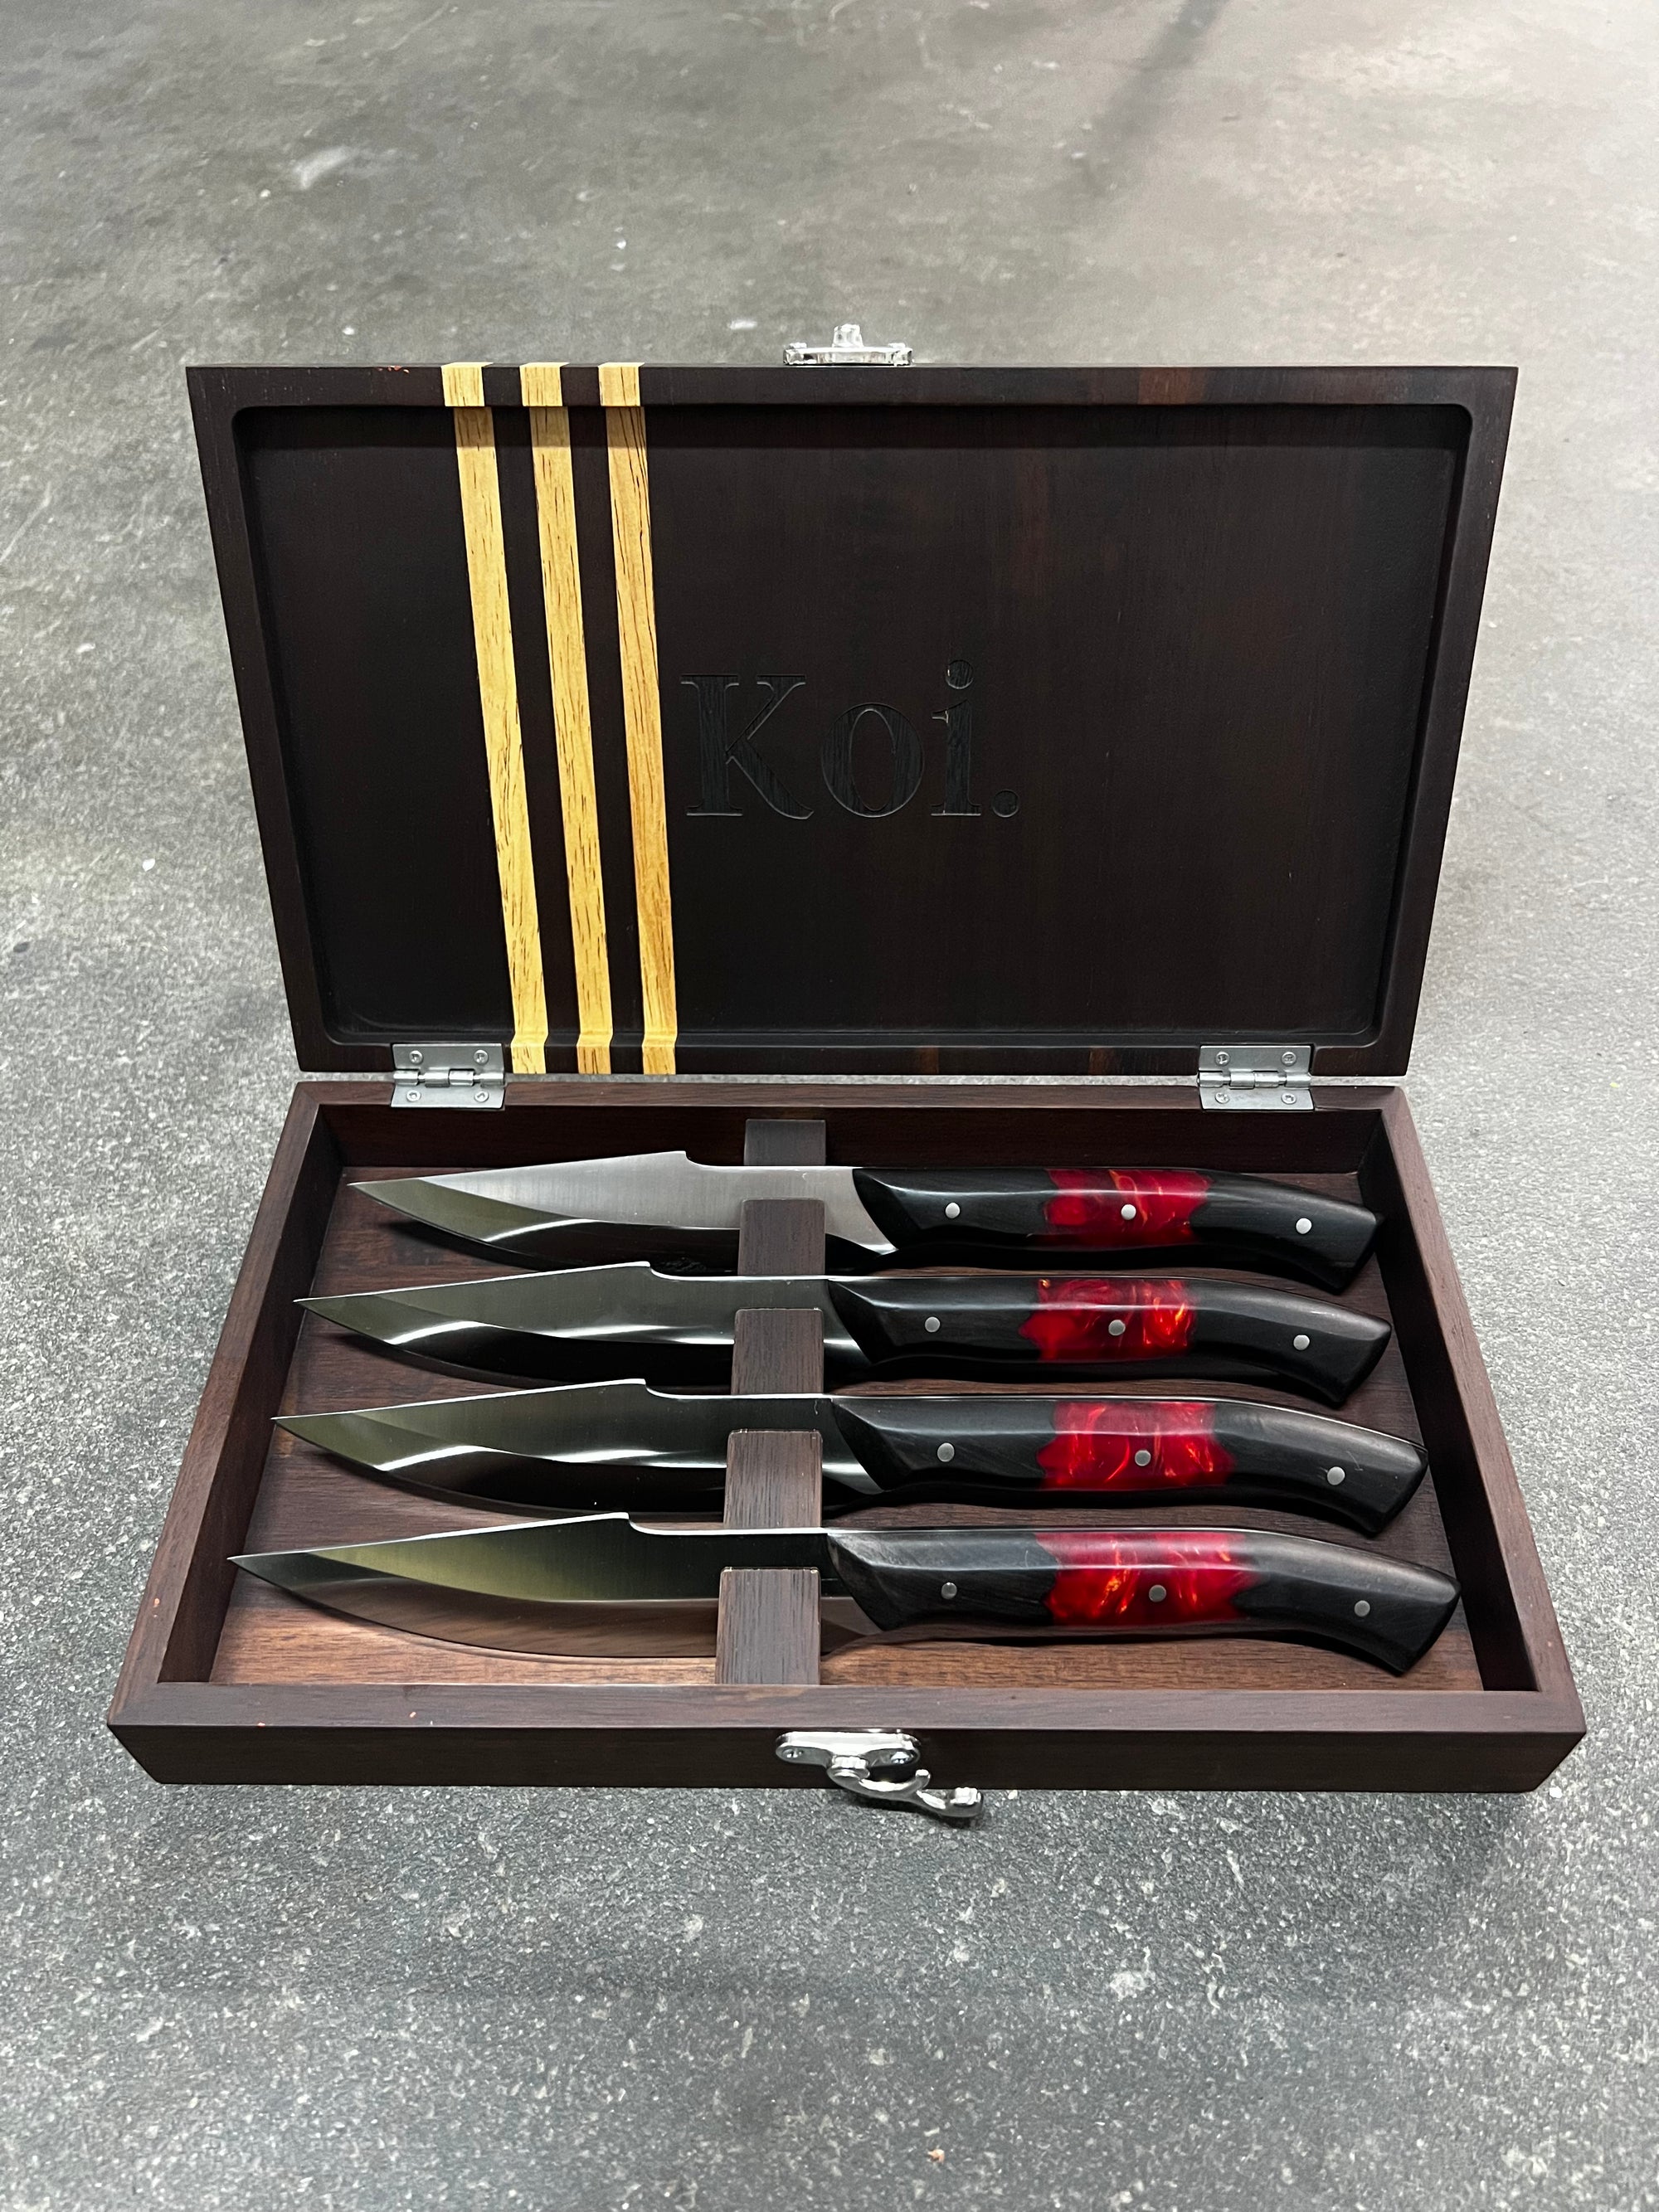 Steak Knives by Koi - Koi Knives